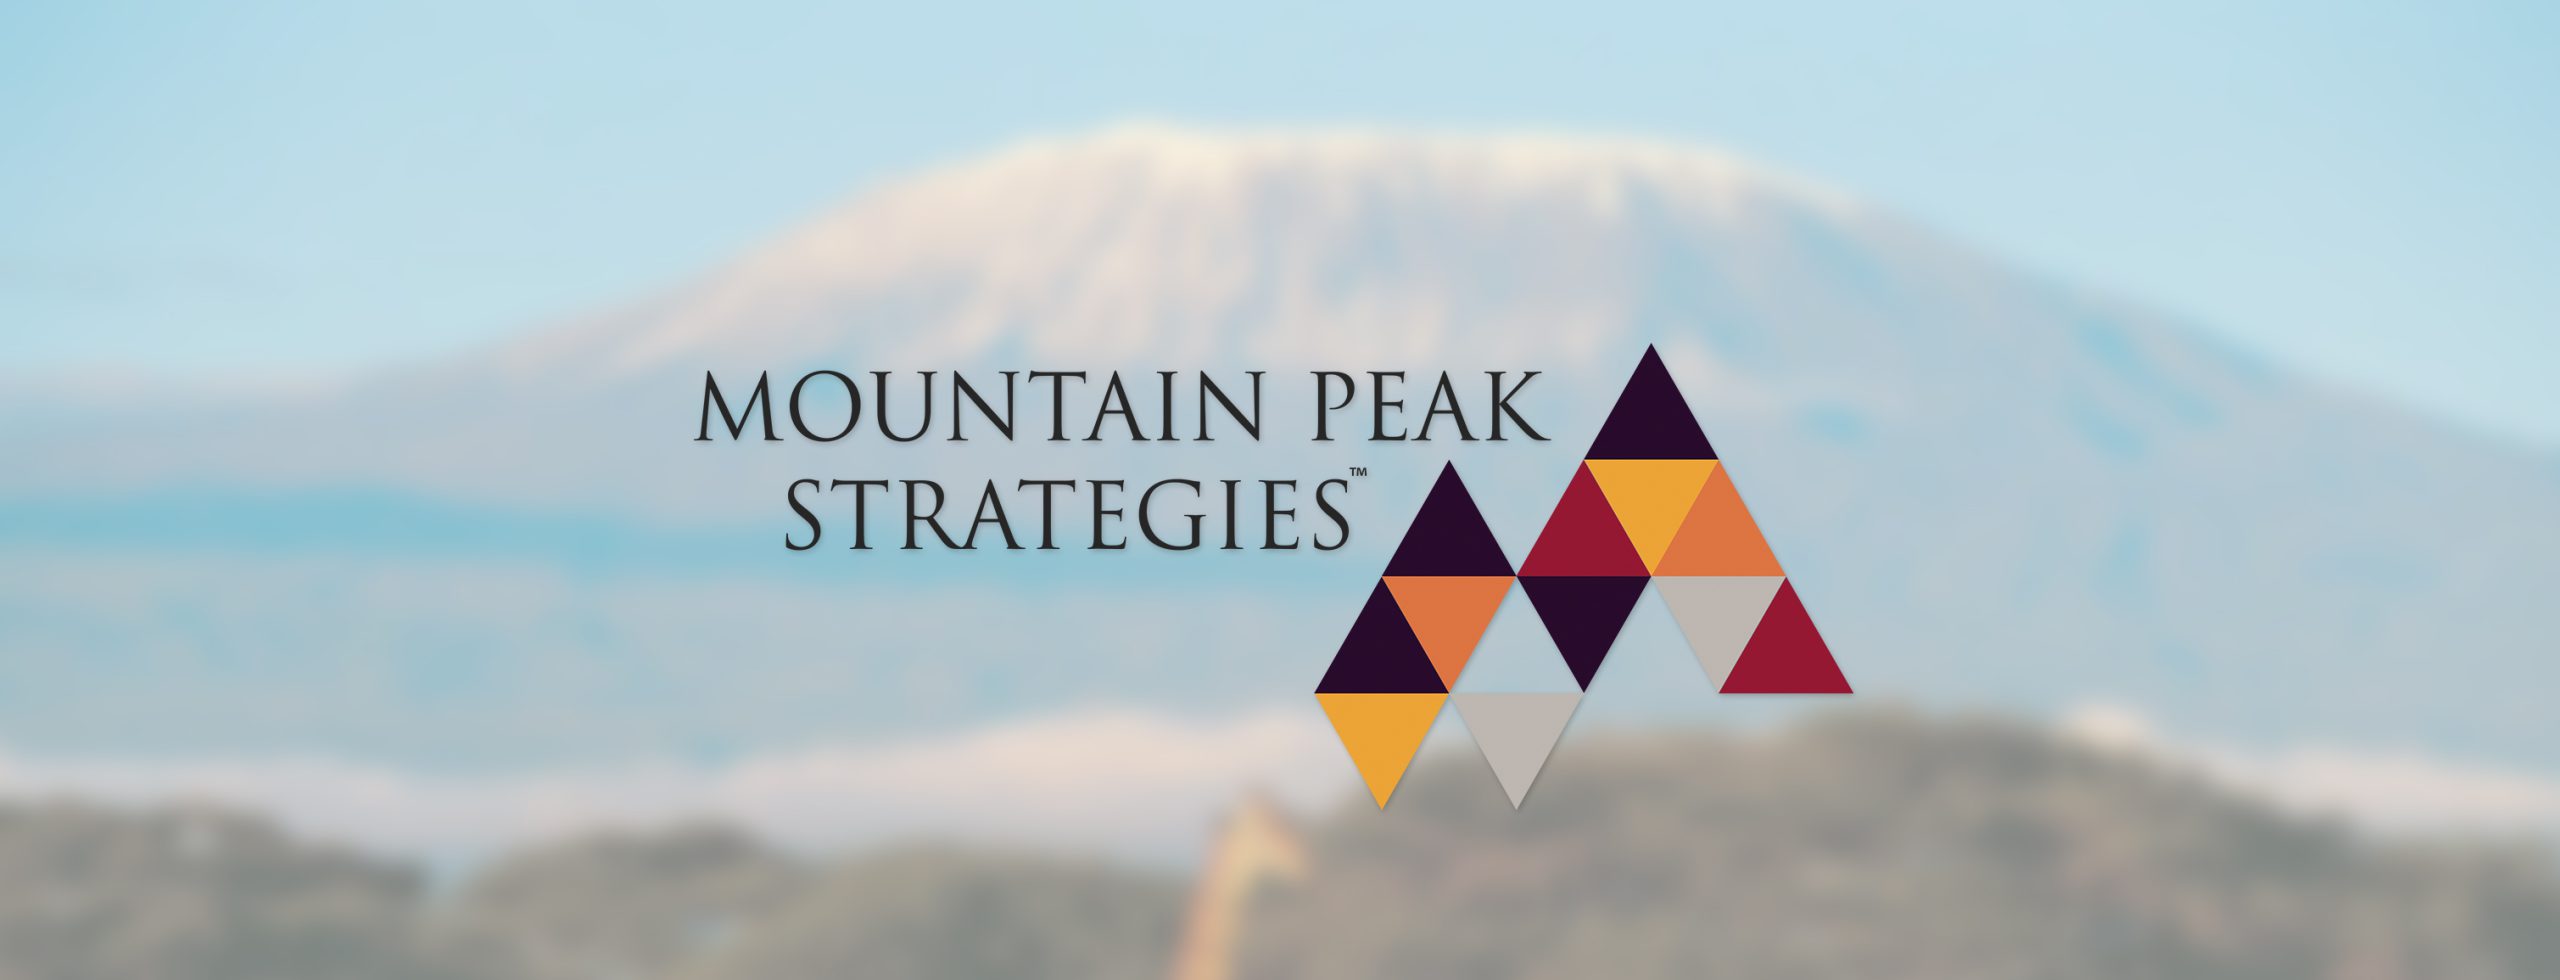 Mountain Peak Strategies